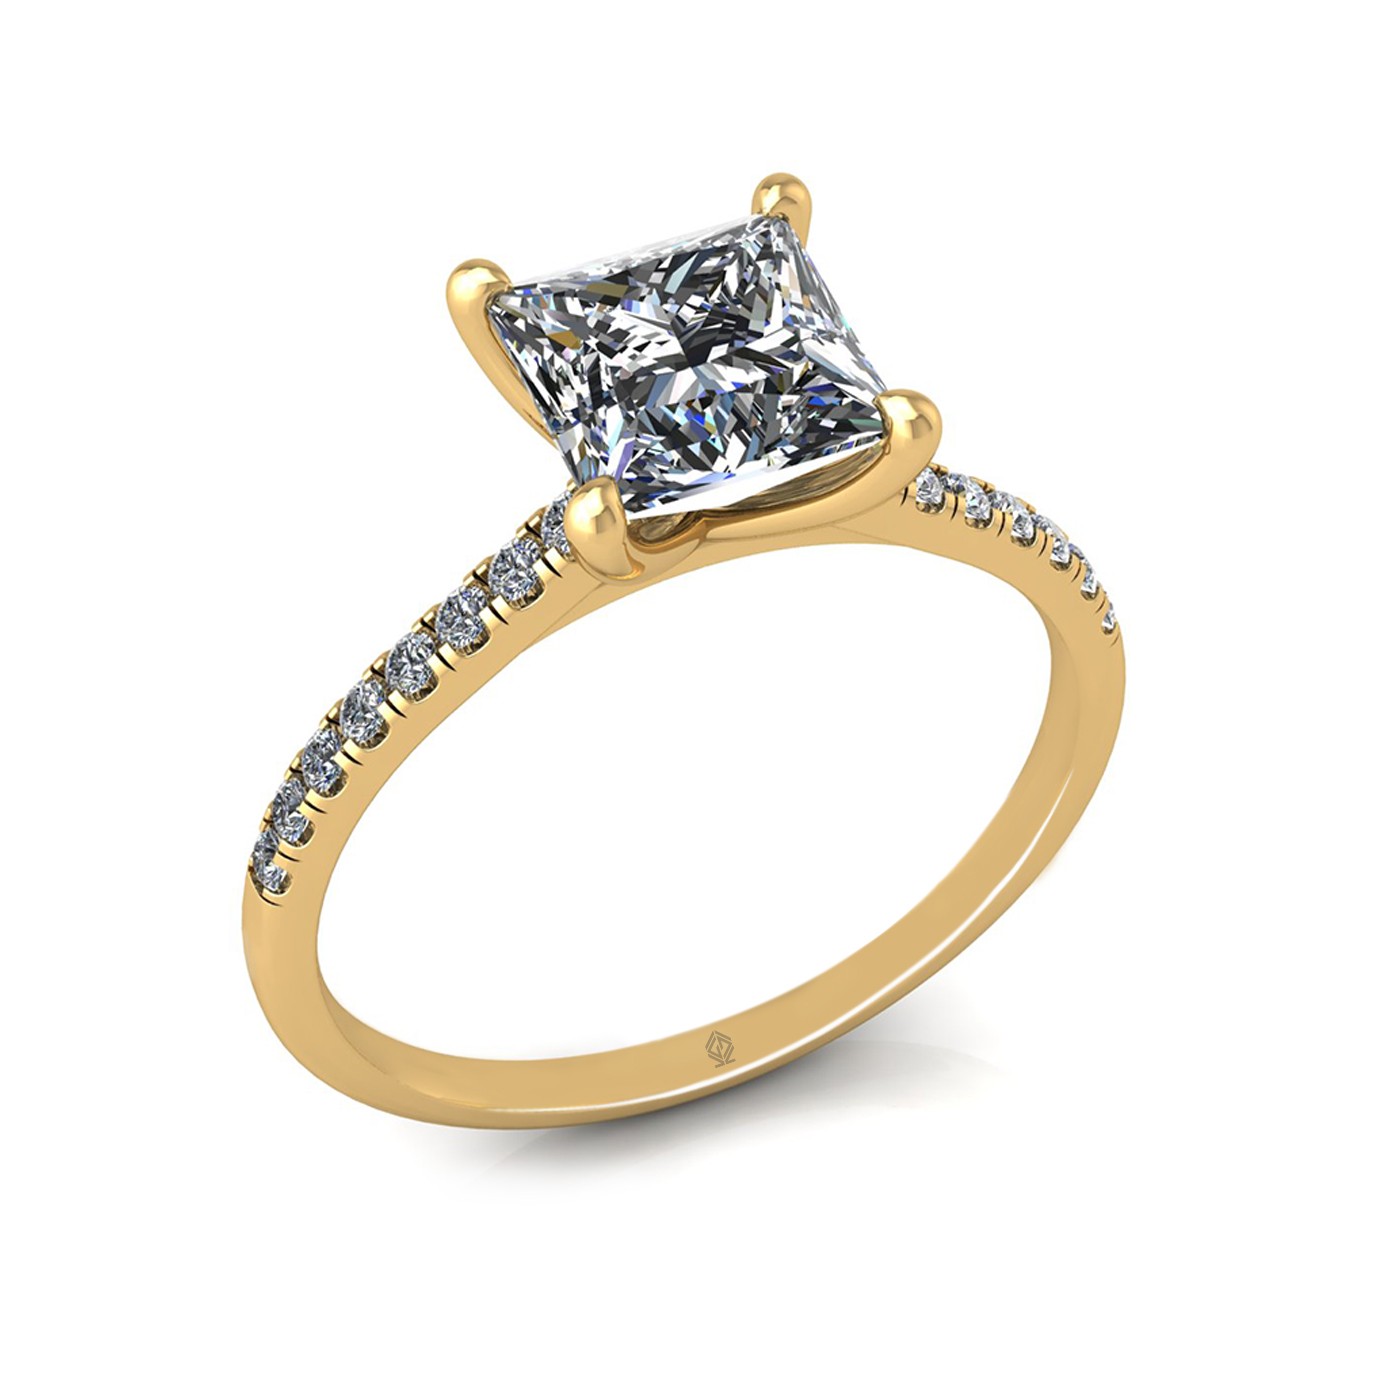 18k yellow gold 1,50 ct 4 prongs princess cut diamond engagement ring with whisper thin pavÉ set band